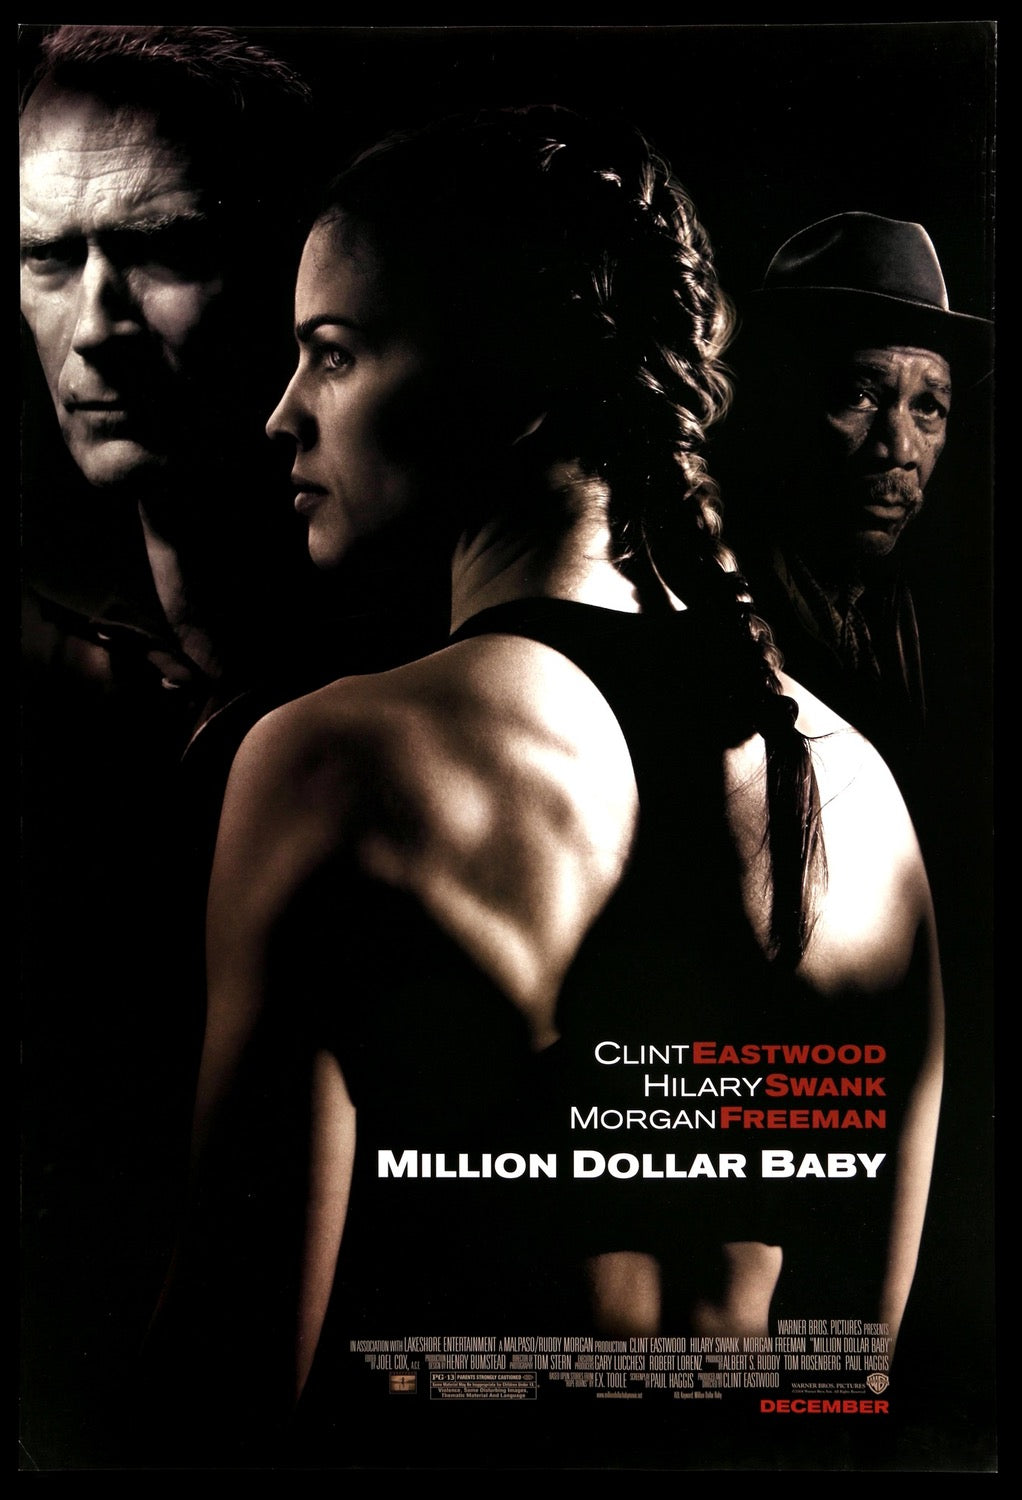 Million Dollar Baby (2004) original movie poster for sale at Original Film Art